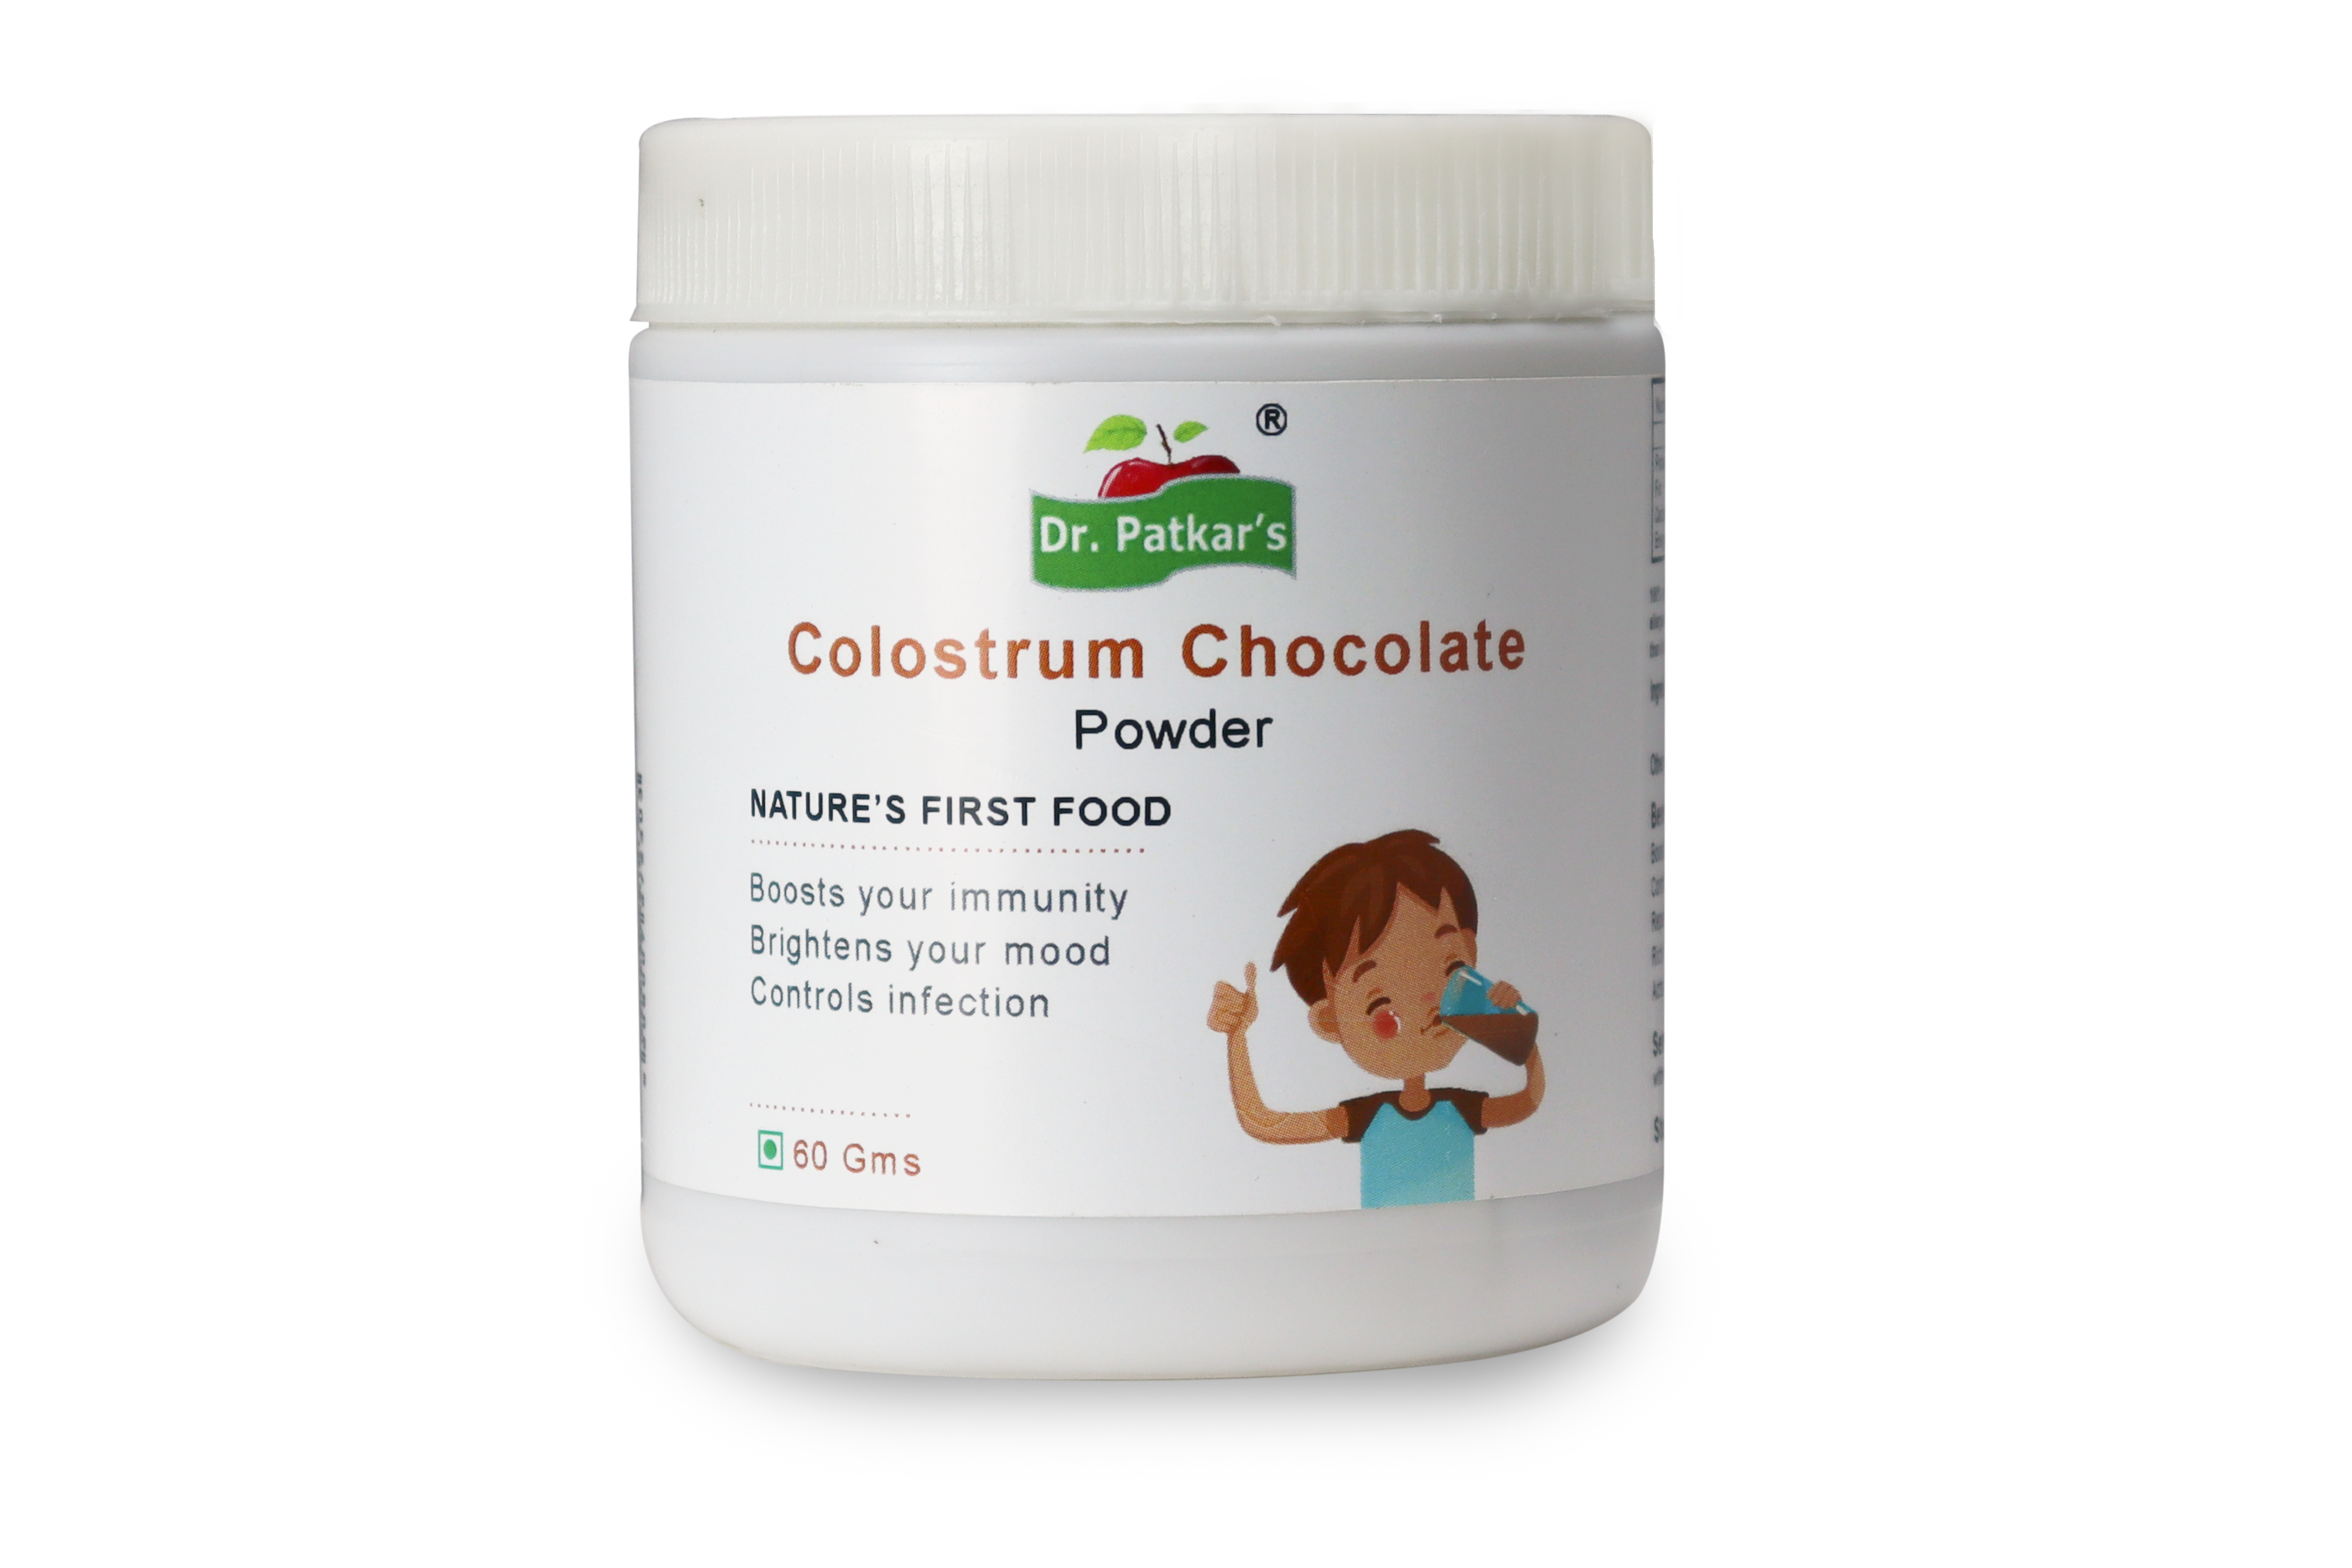 Buy Dr. Patkar's Chocolate Colostrum Powder at Best Price Online